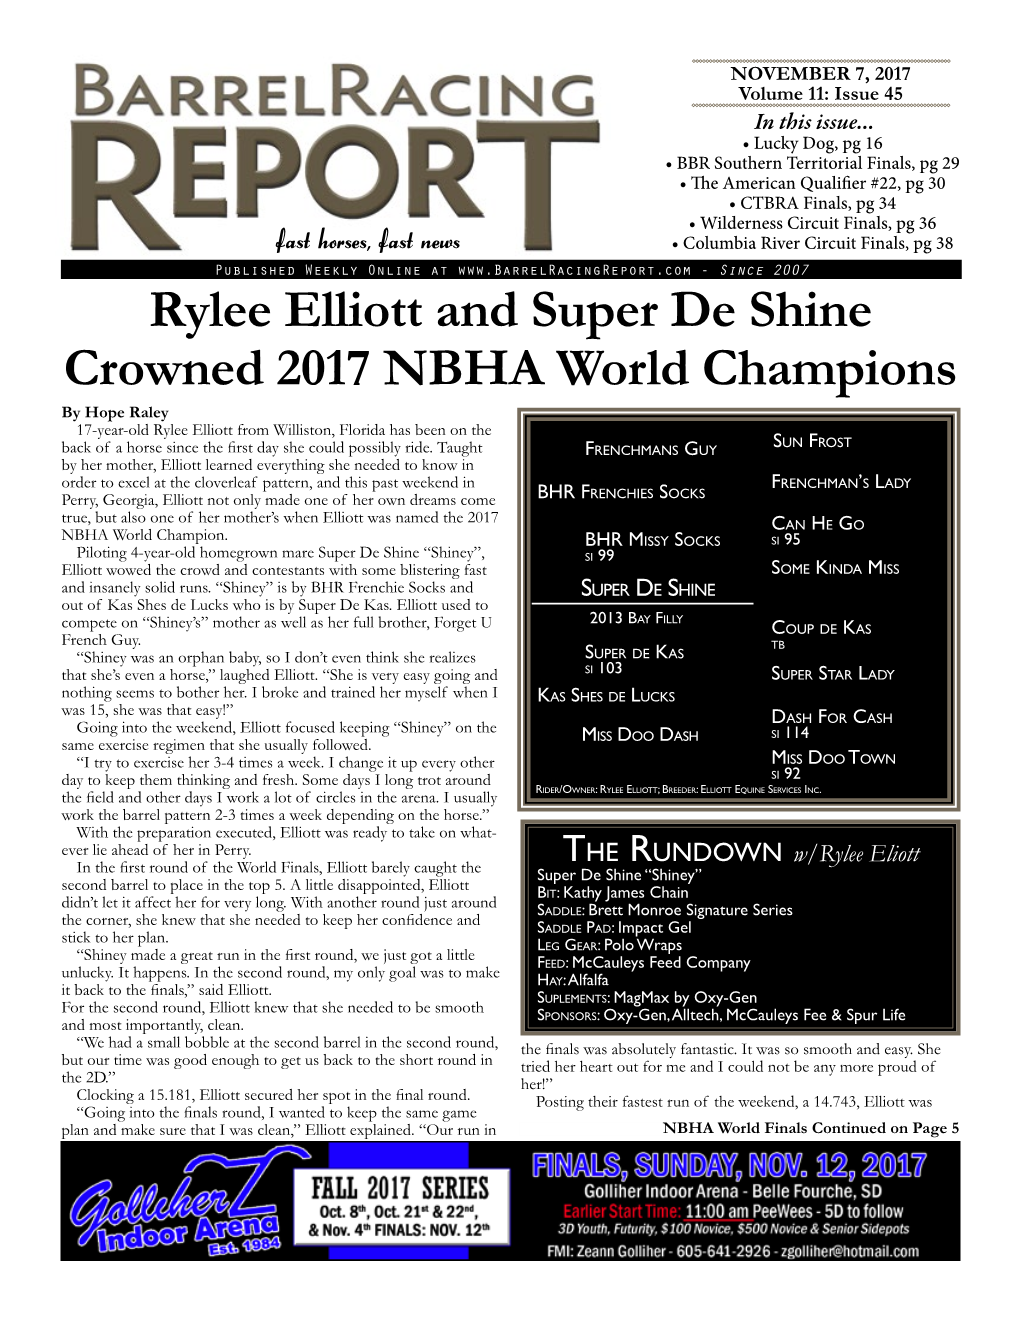 Rylee Elliott and Super De Shine Crowned 2017 NBHA World